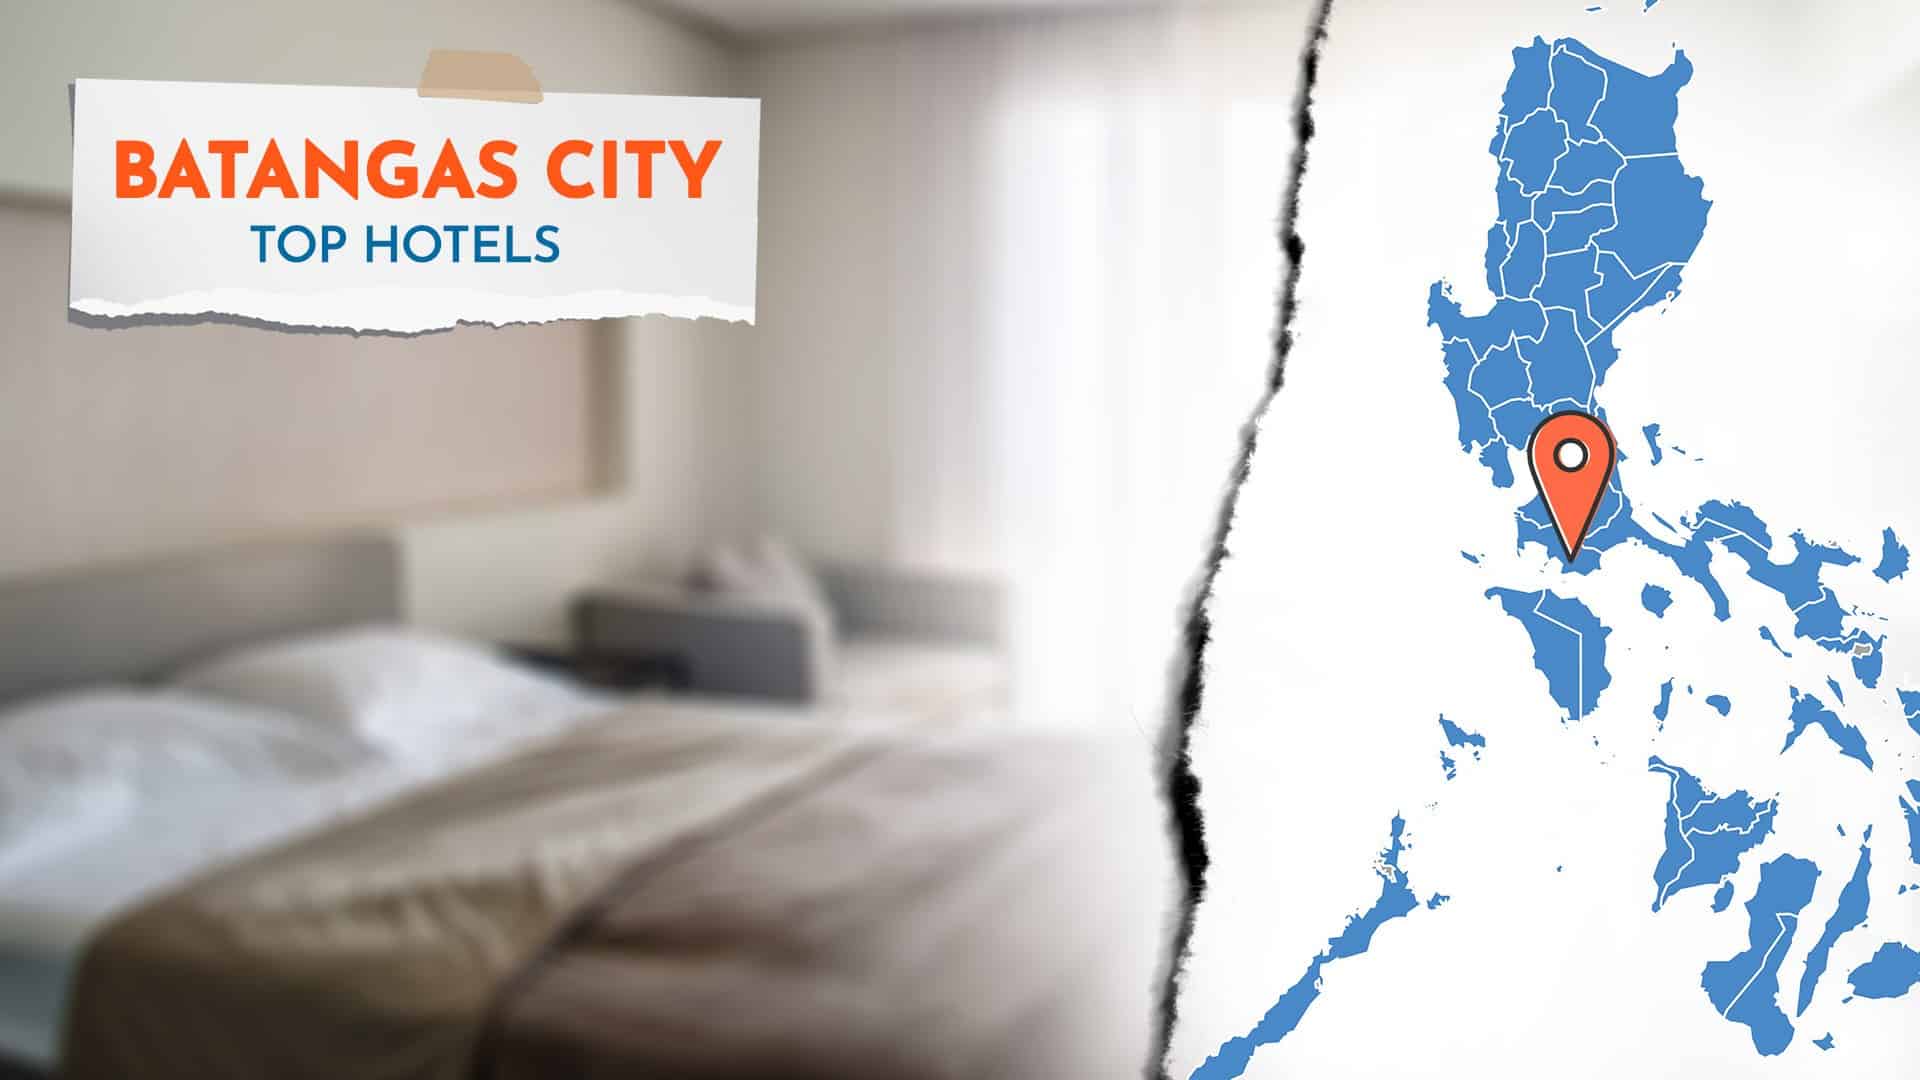 Batangas City- Top Hotels